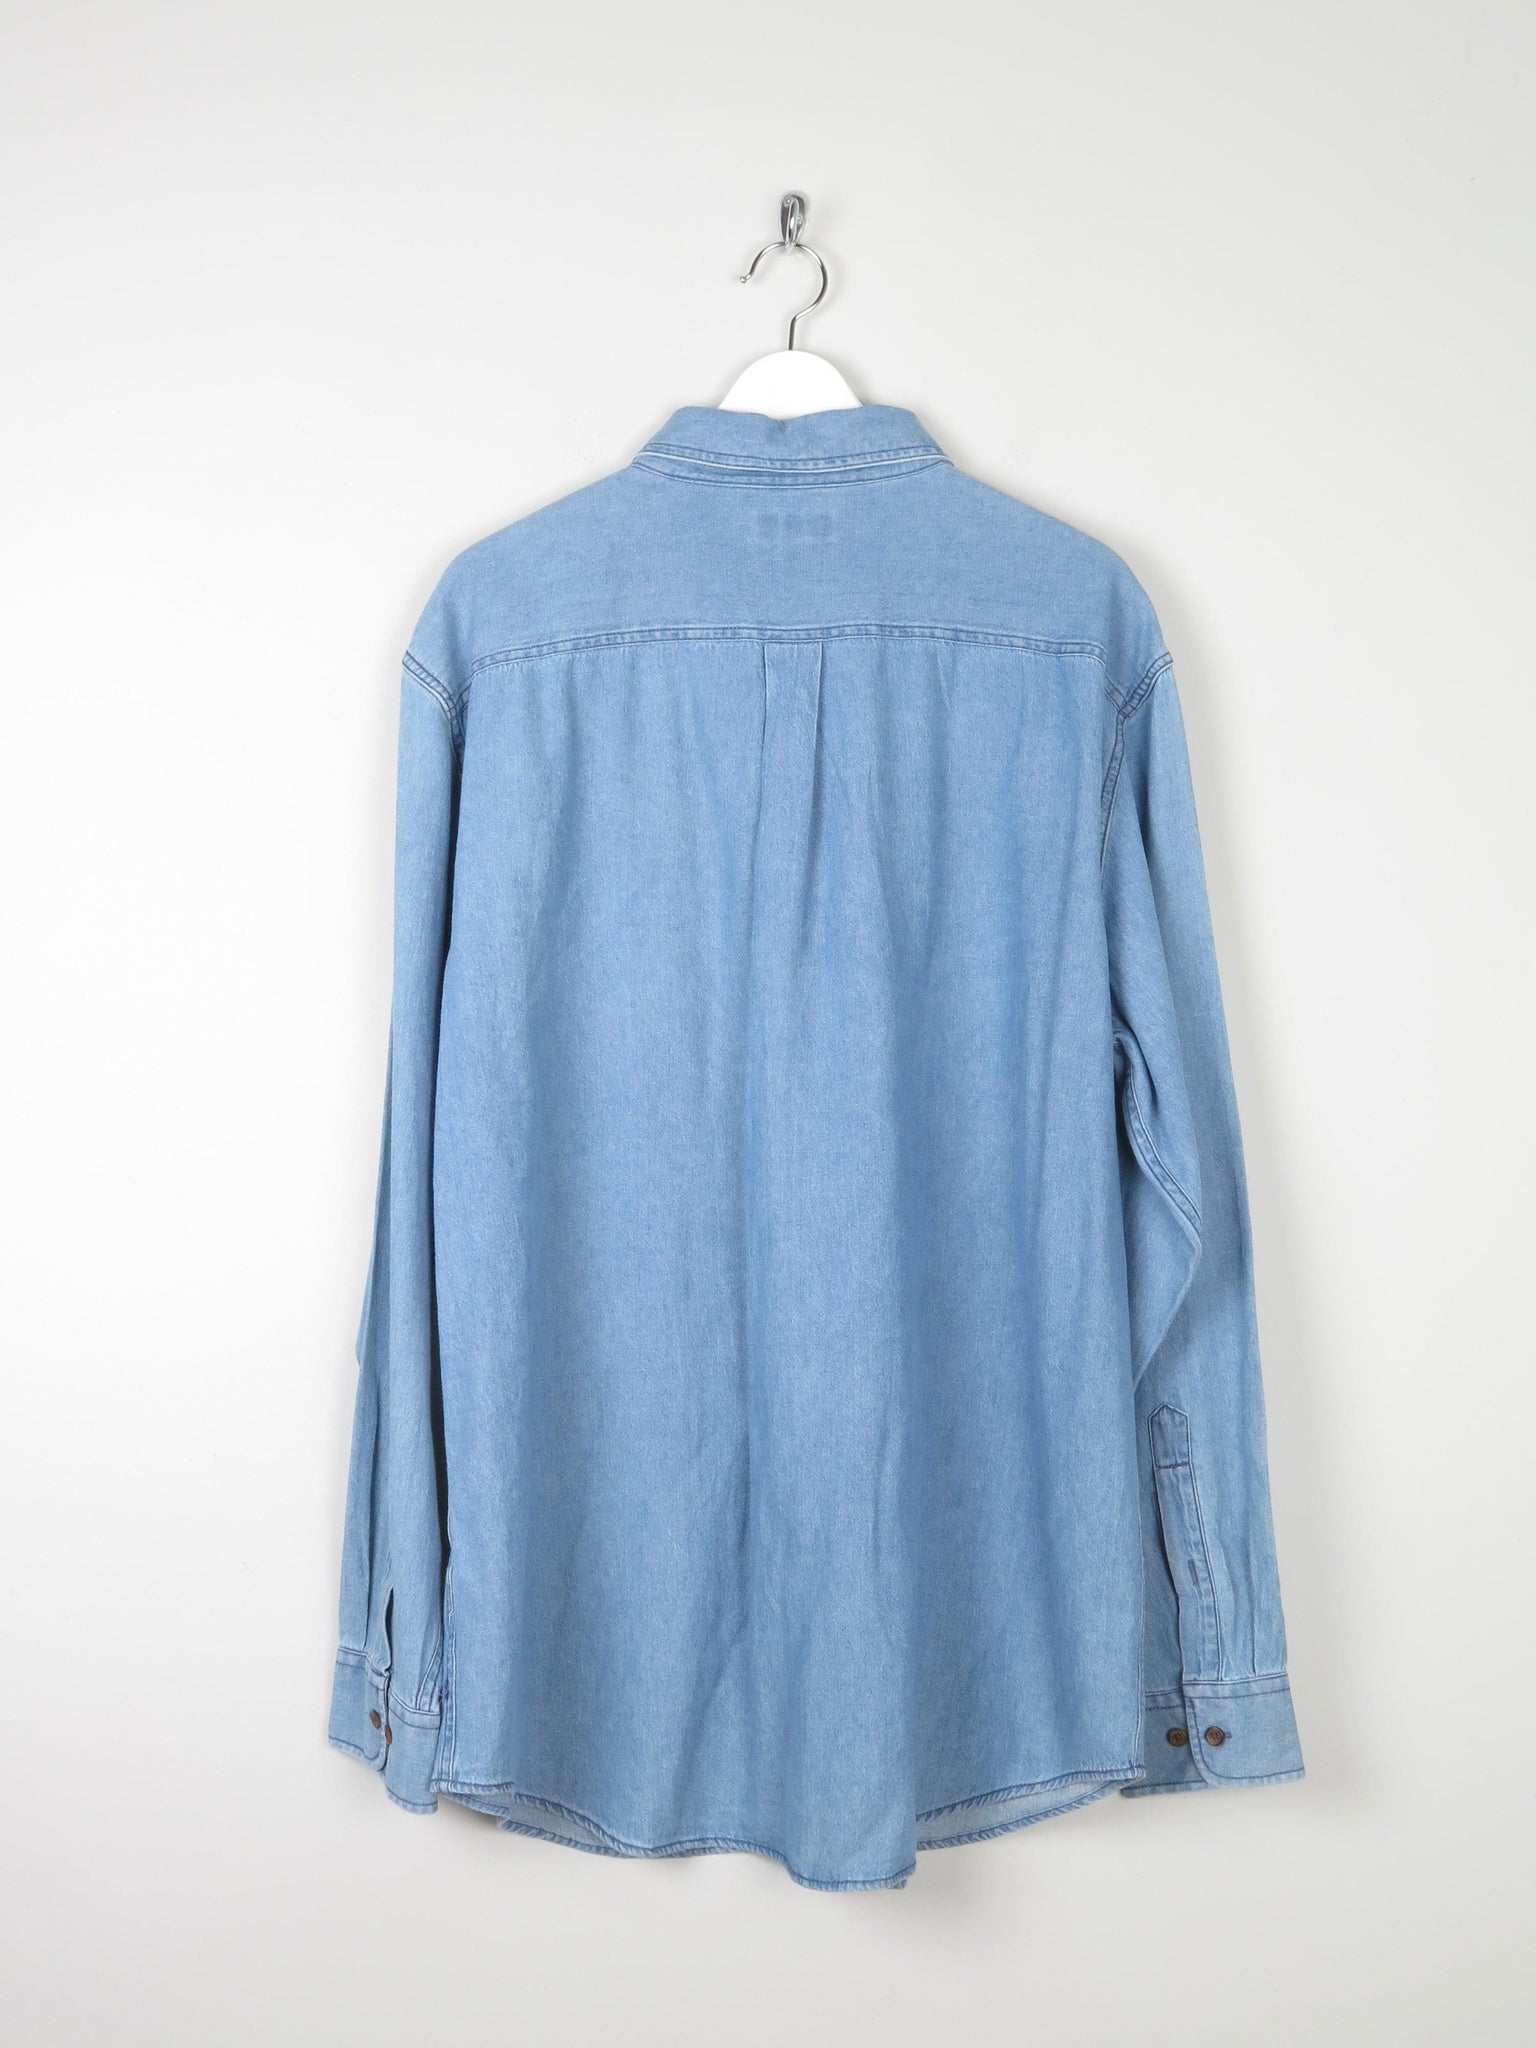 Mens Blue Denim Shirt New XL - The Harlequin